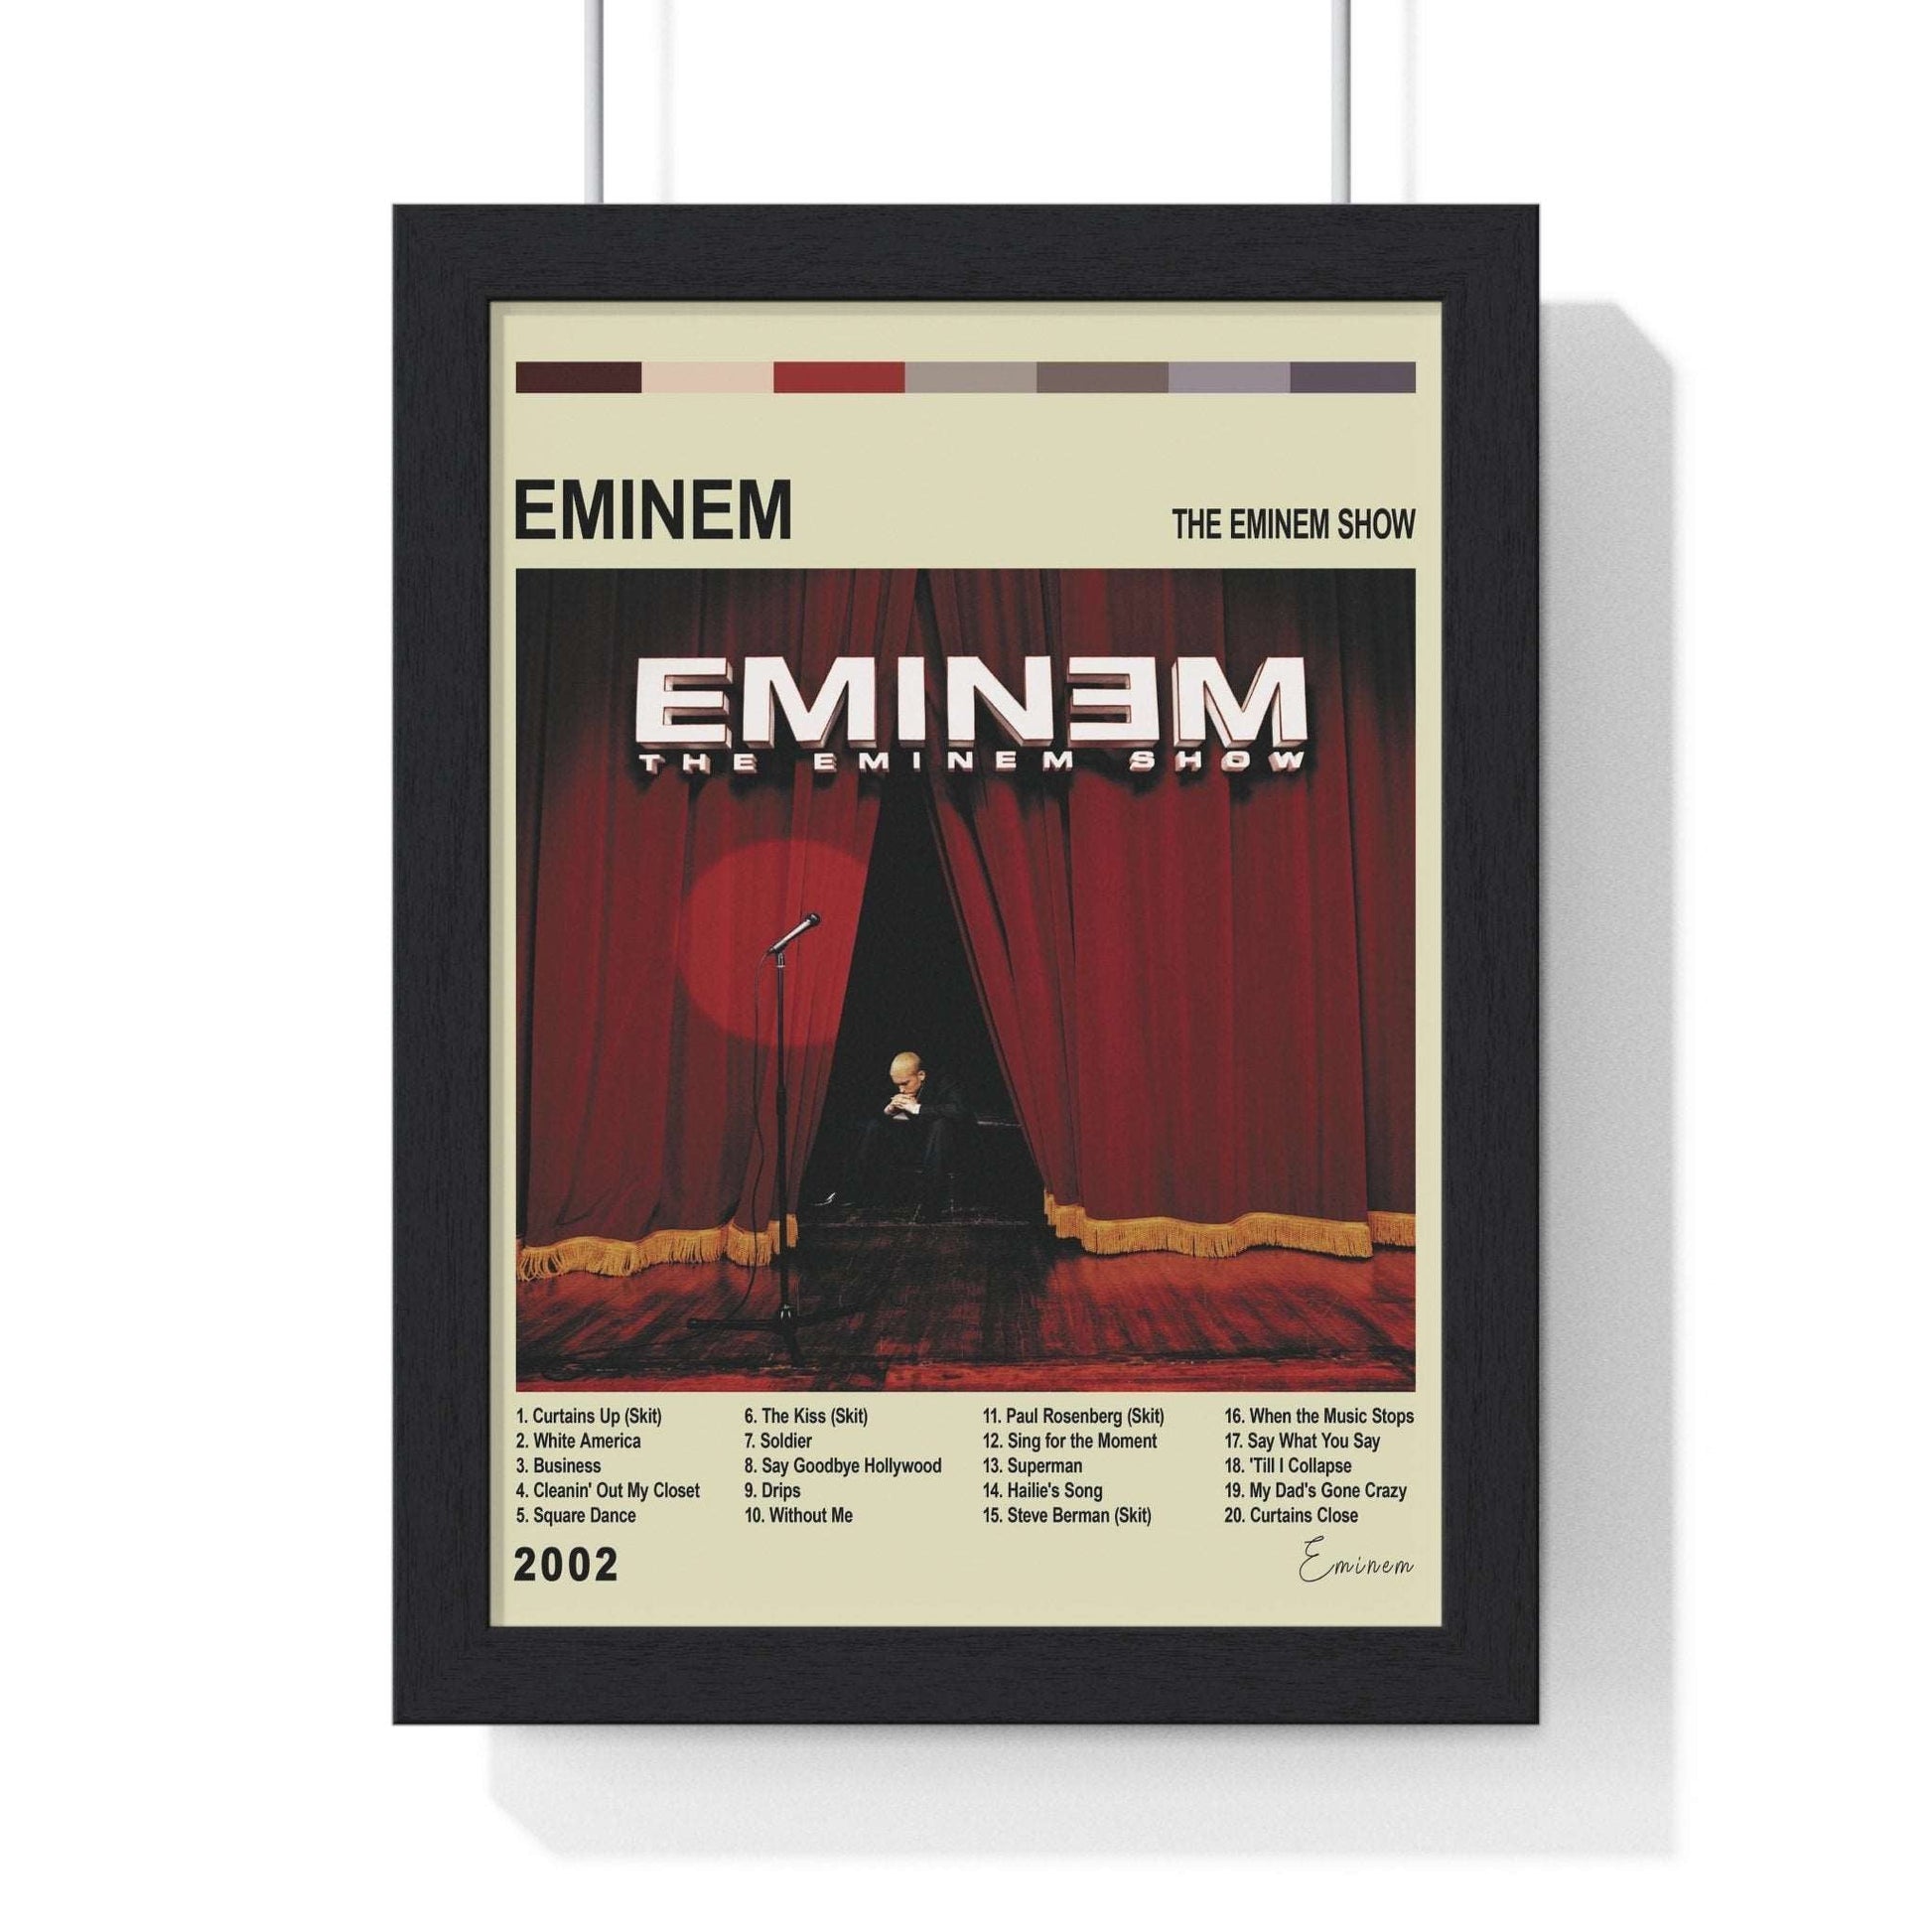 Eminem, The Eminem Show, Album Cover Poster sold by Naval Phedra, SKU  40373731